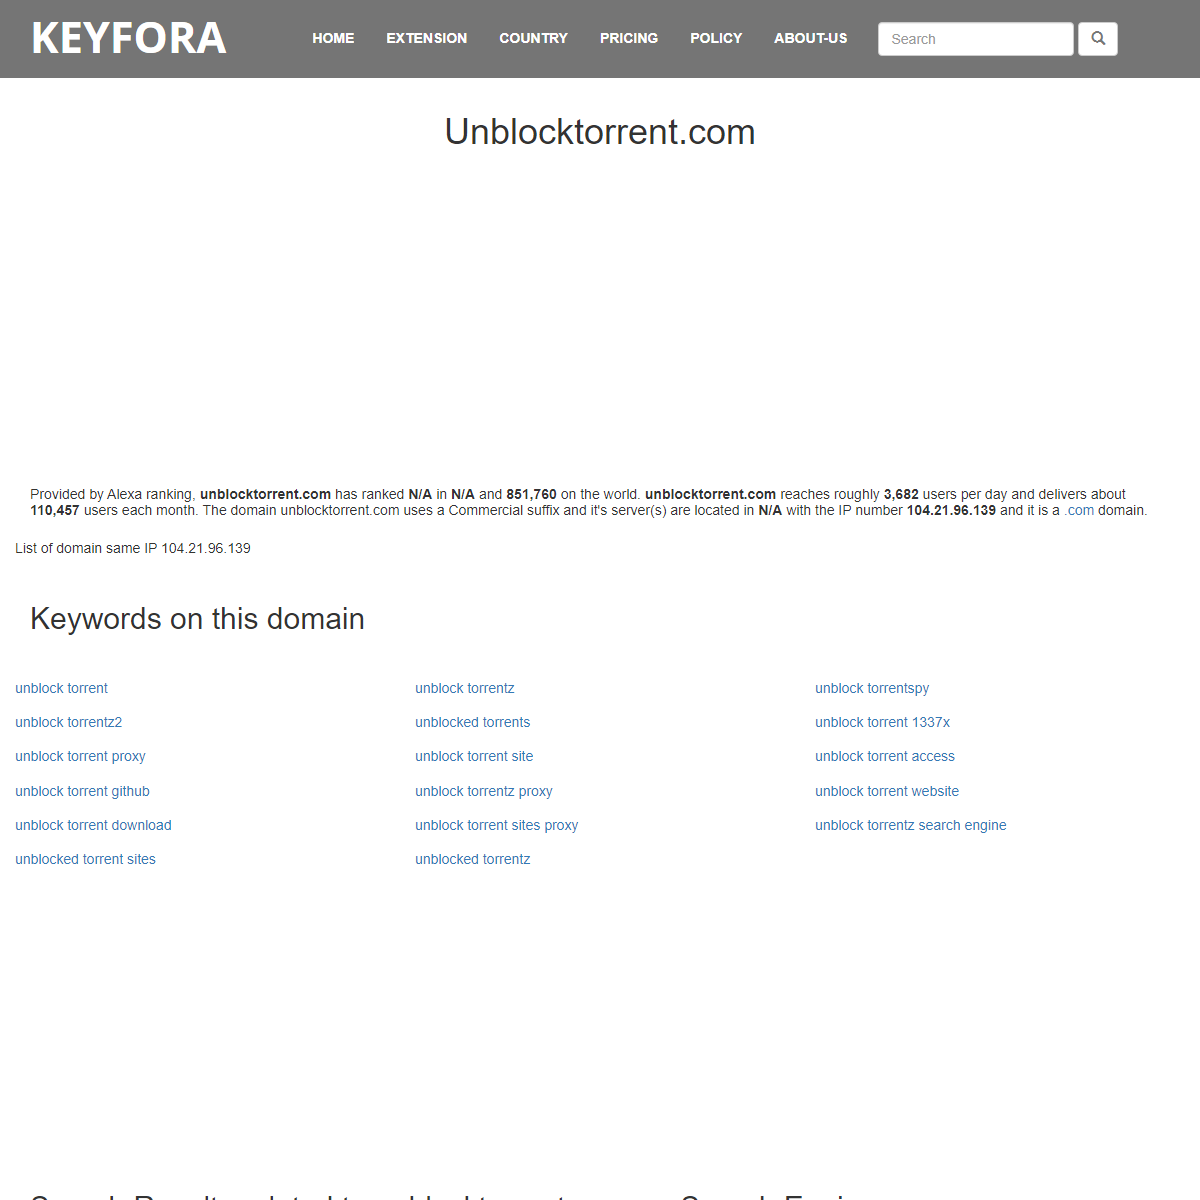 A complete backup of https://www.keyfora.com/site/unblocktorrent.com